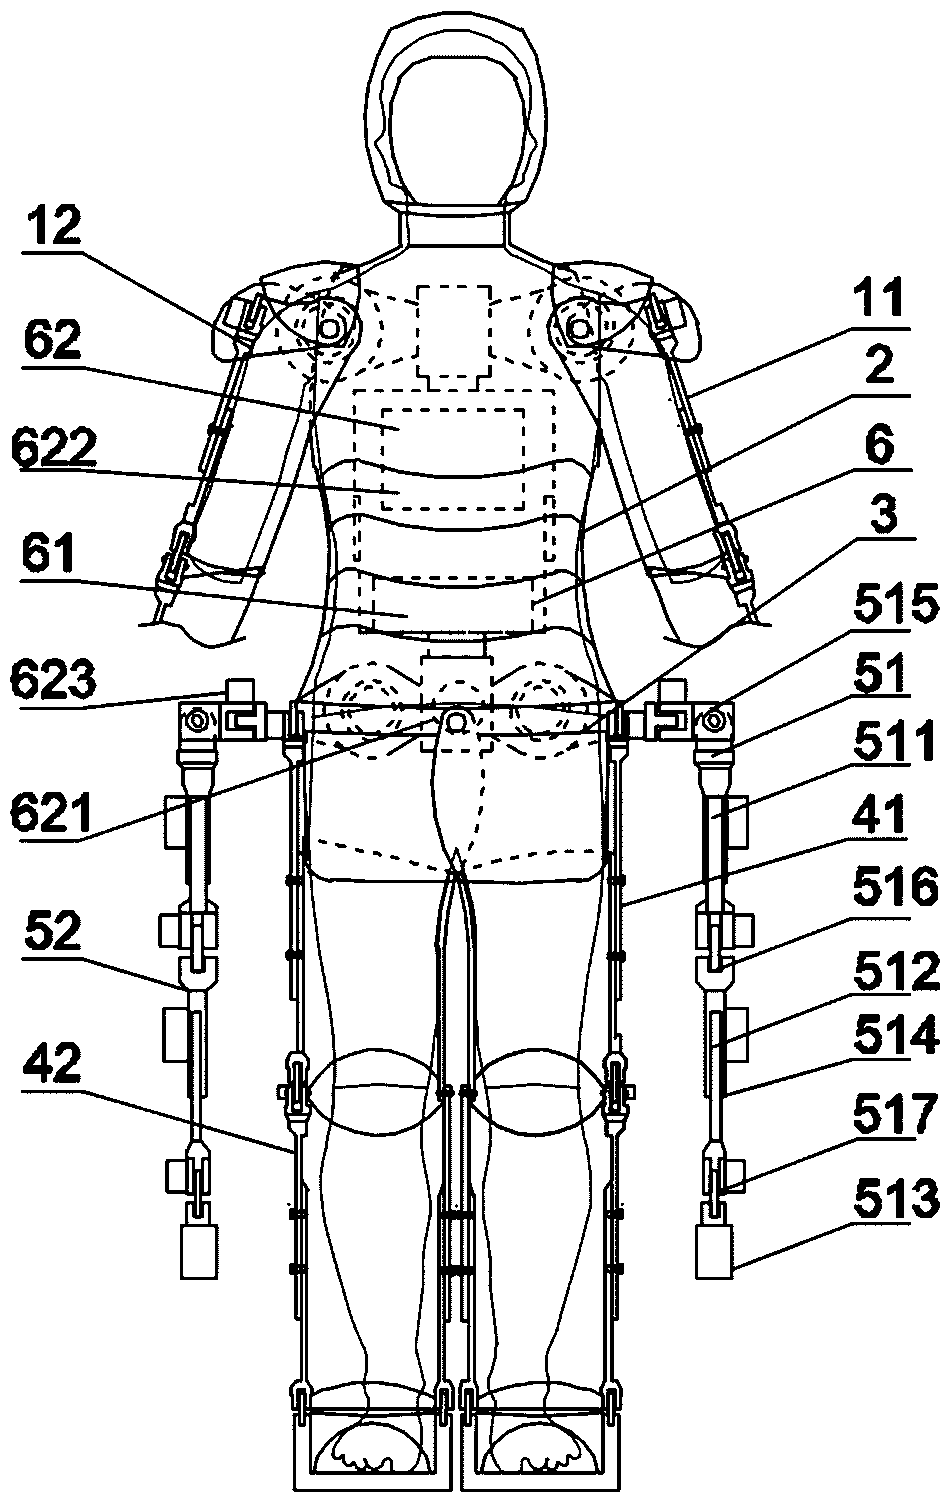 Multi-functional auxiliary arm self-balancing mechanical exoskeleton